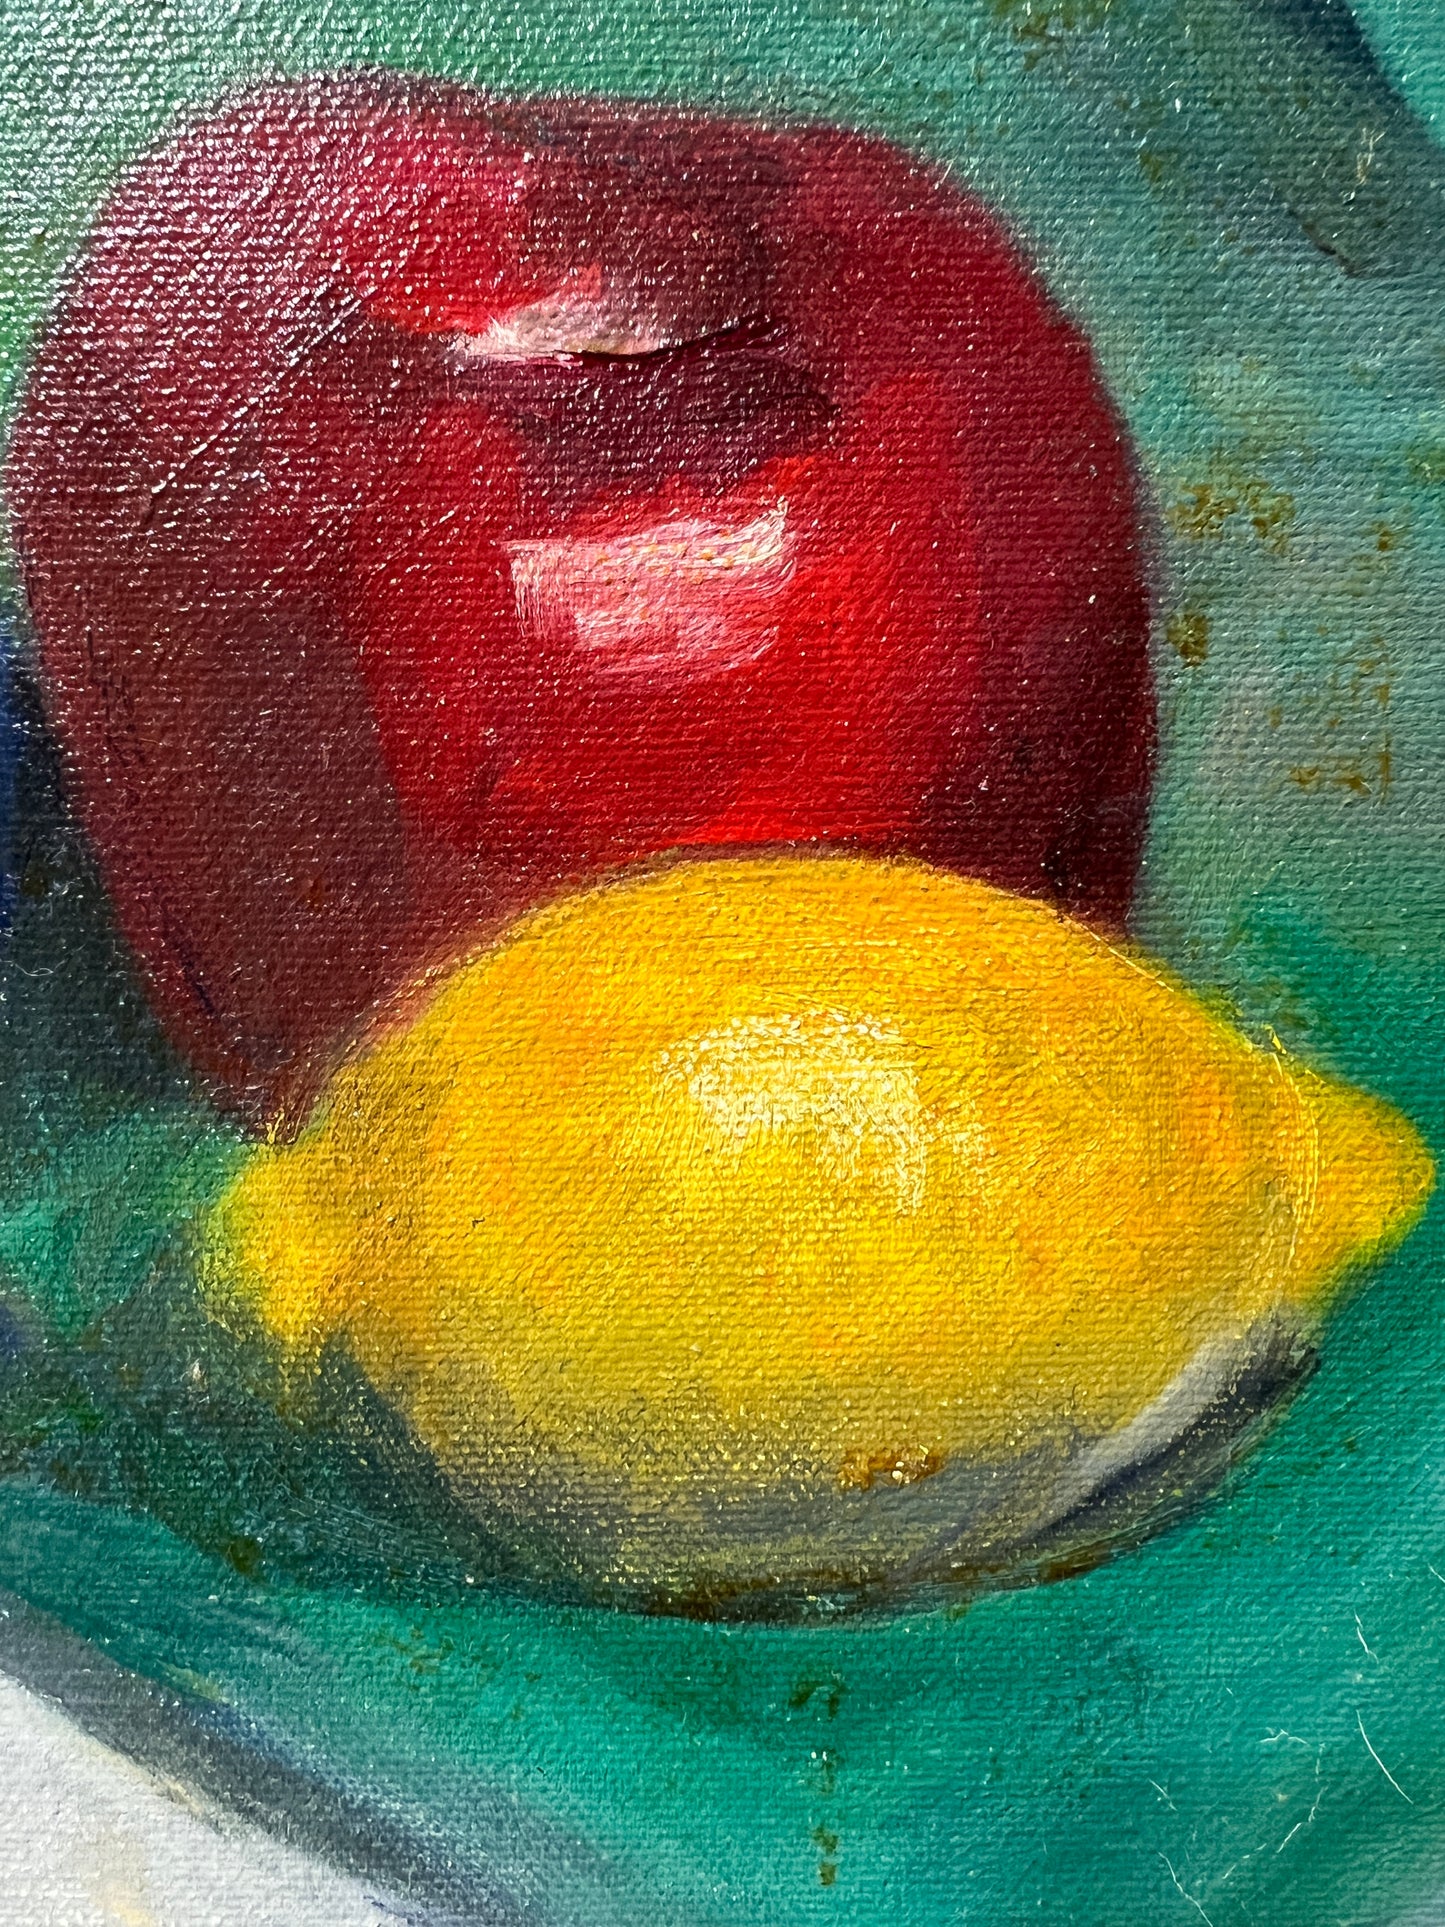 Vintage Oil Painting on Canvas Still Life, Fruits, Framed, Signed Spiesel 1998